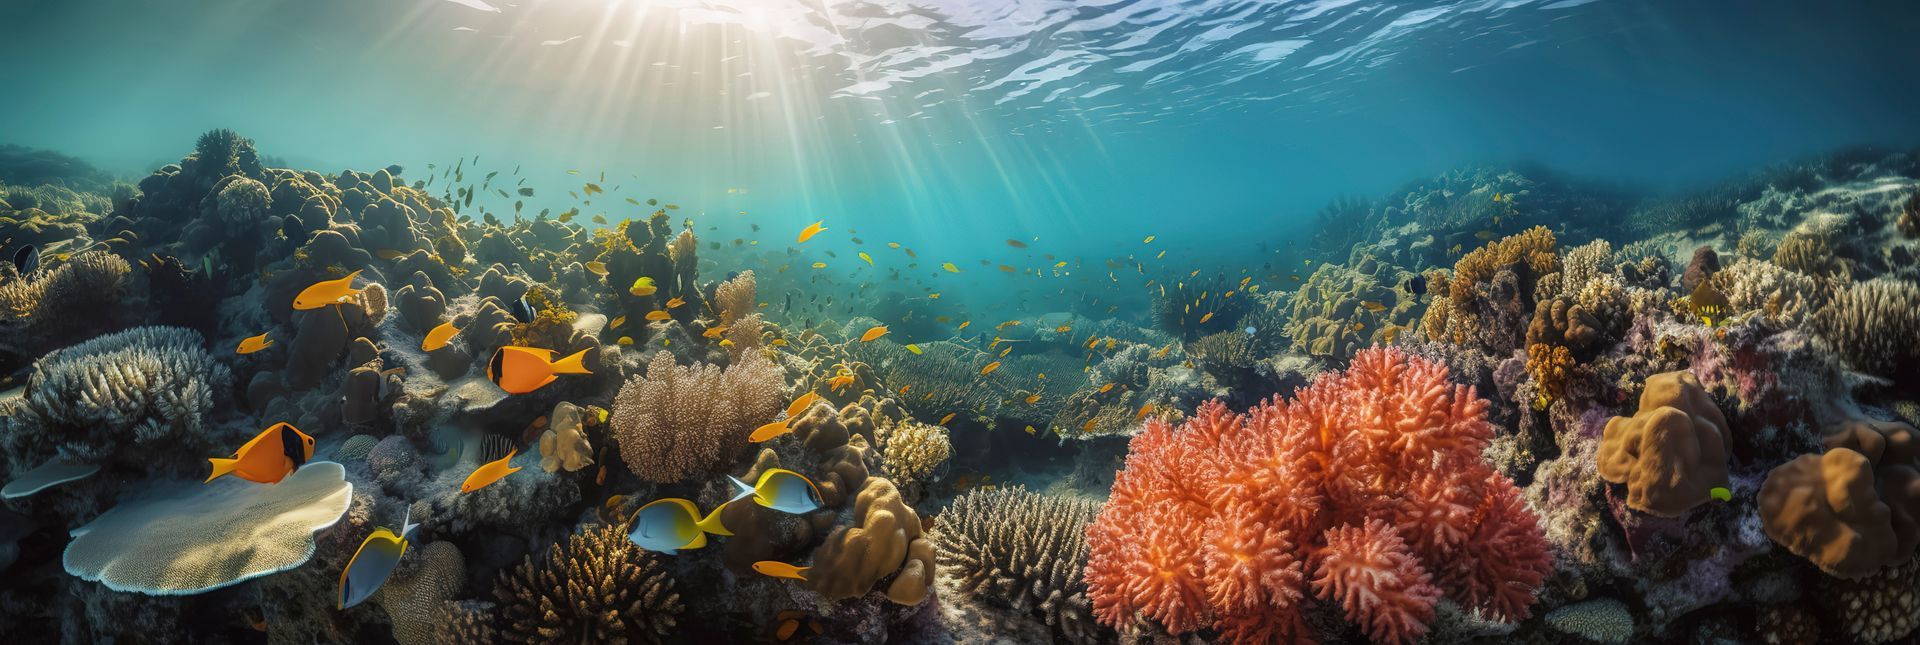 Image of underwater marine life